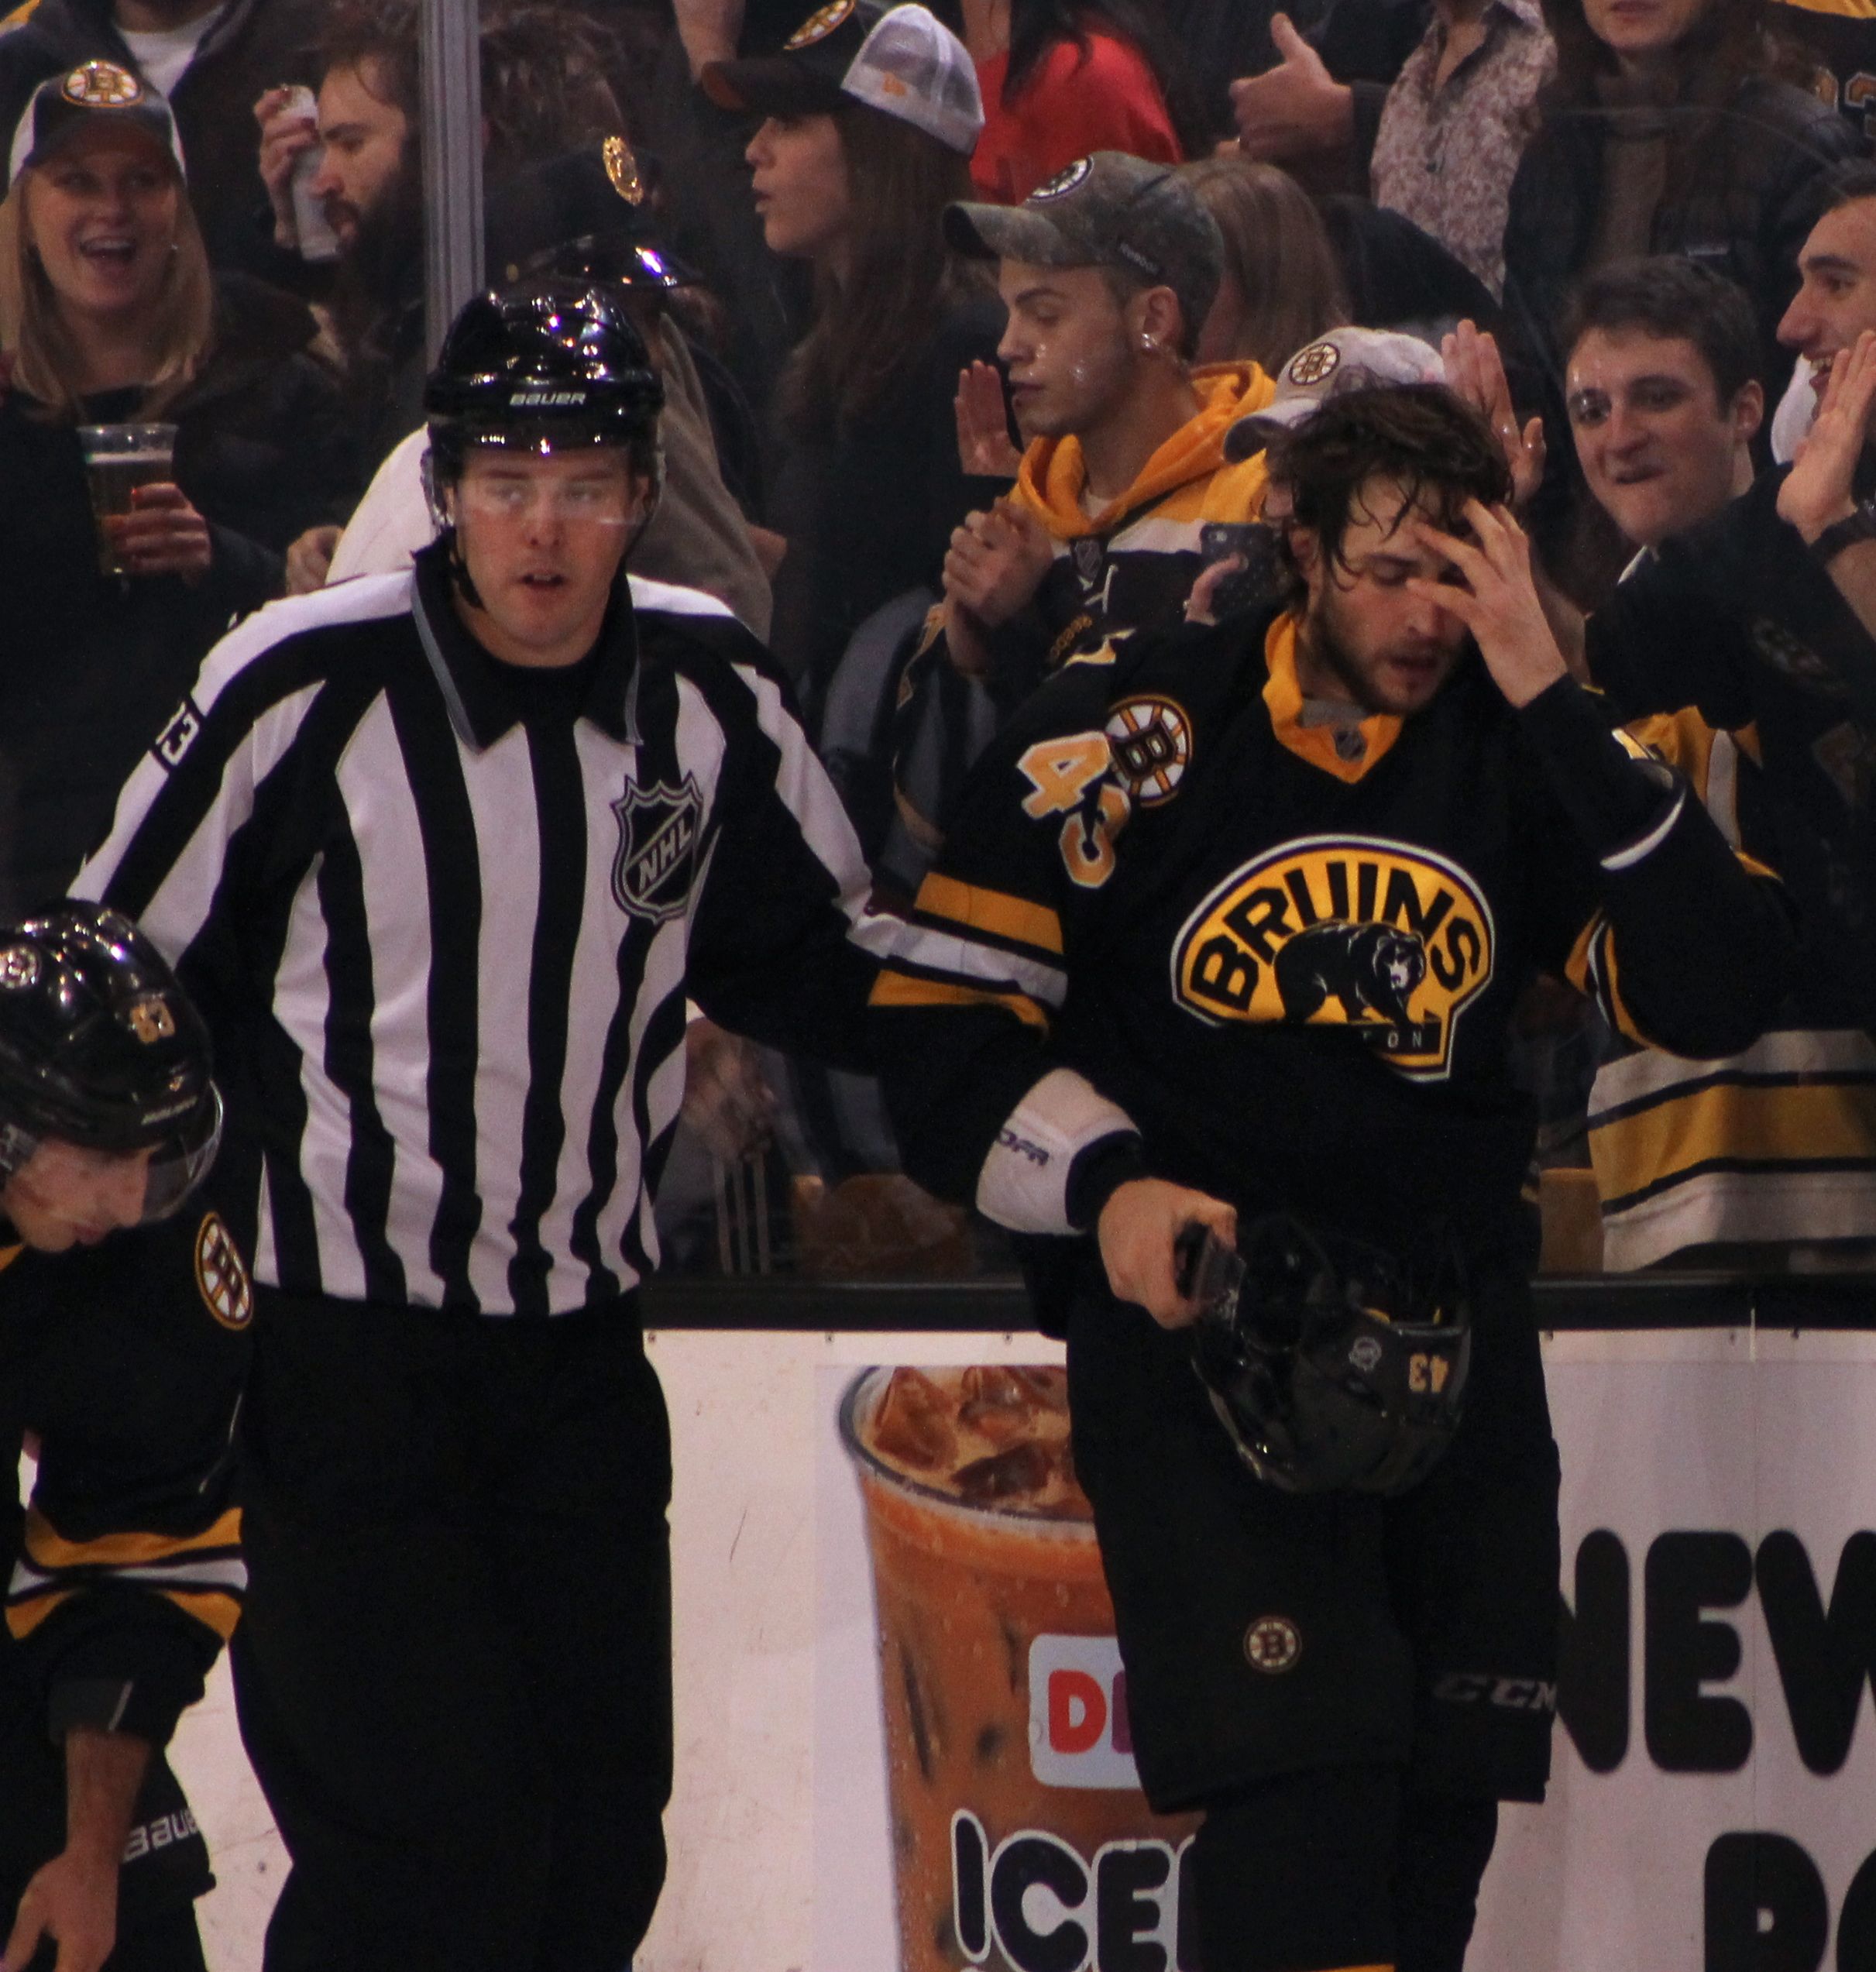 Game Night Gallery: Boston Bruins vs Buffalo Sabres, Dec. 21, 2014